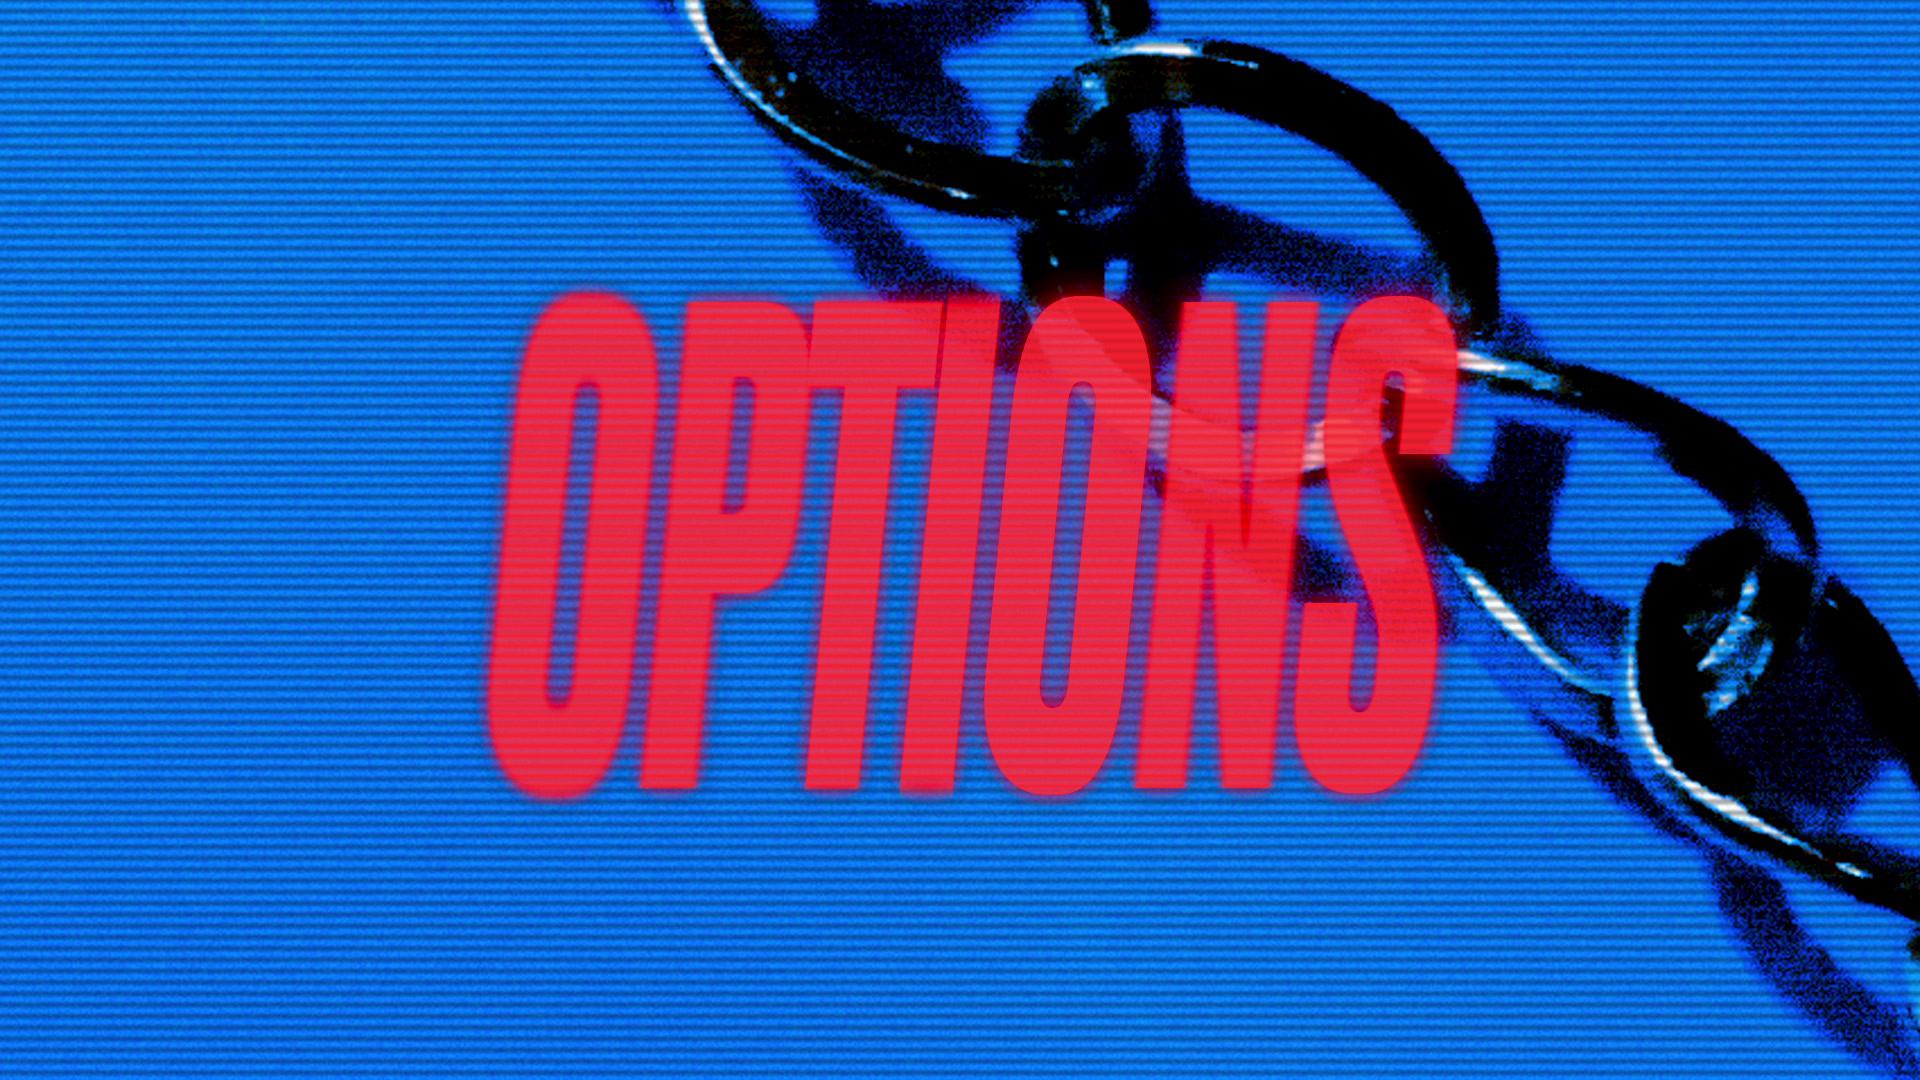 iann dior - options (Lyric Video)